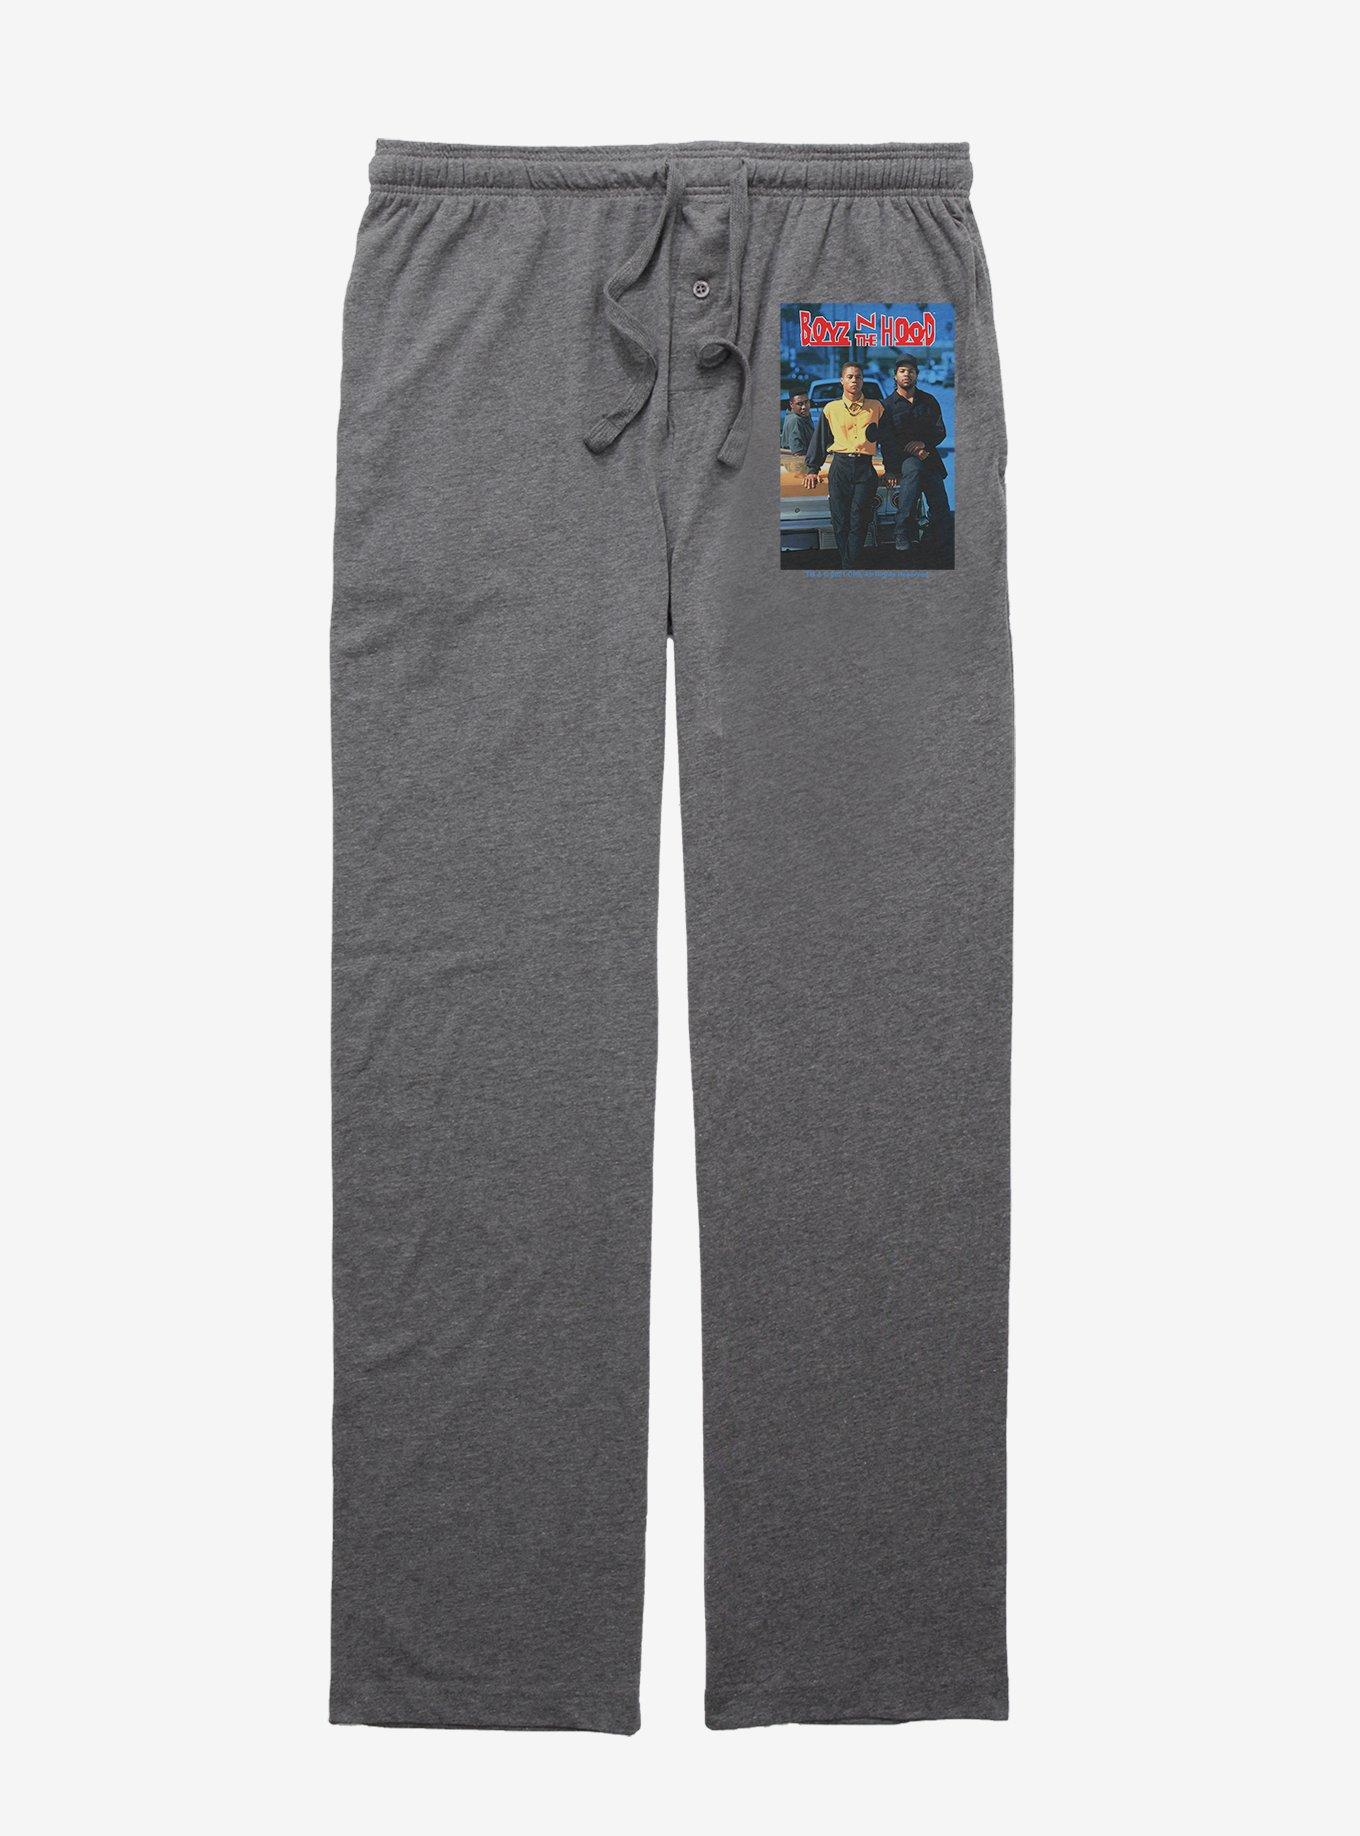 Boyz N The Hood Movie Poster Pajama Pants - GREY | Hot Topic